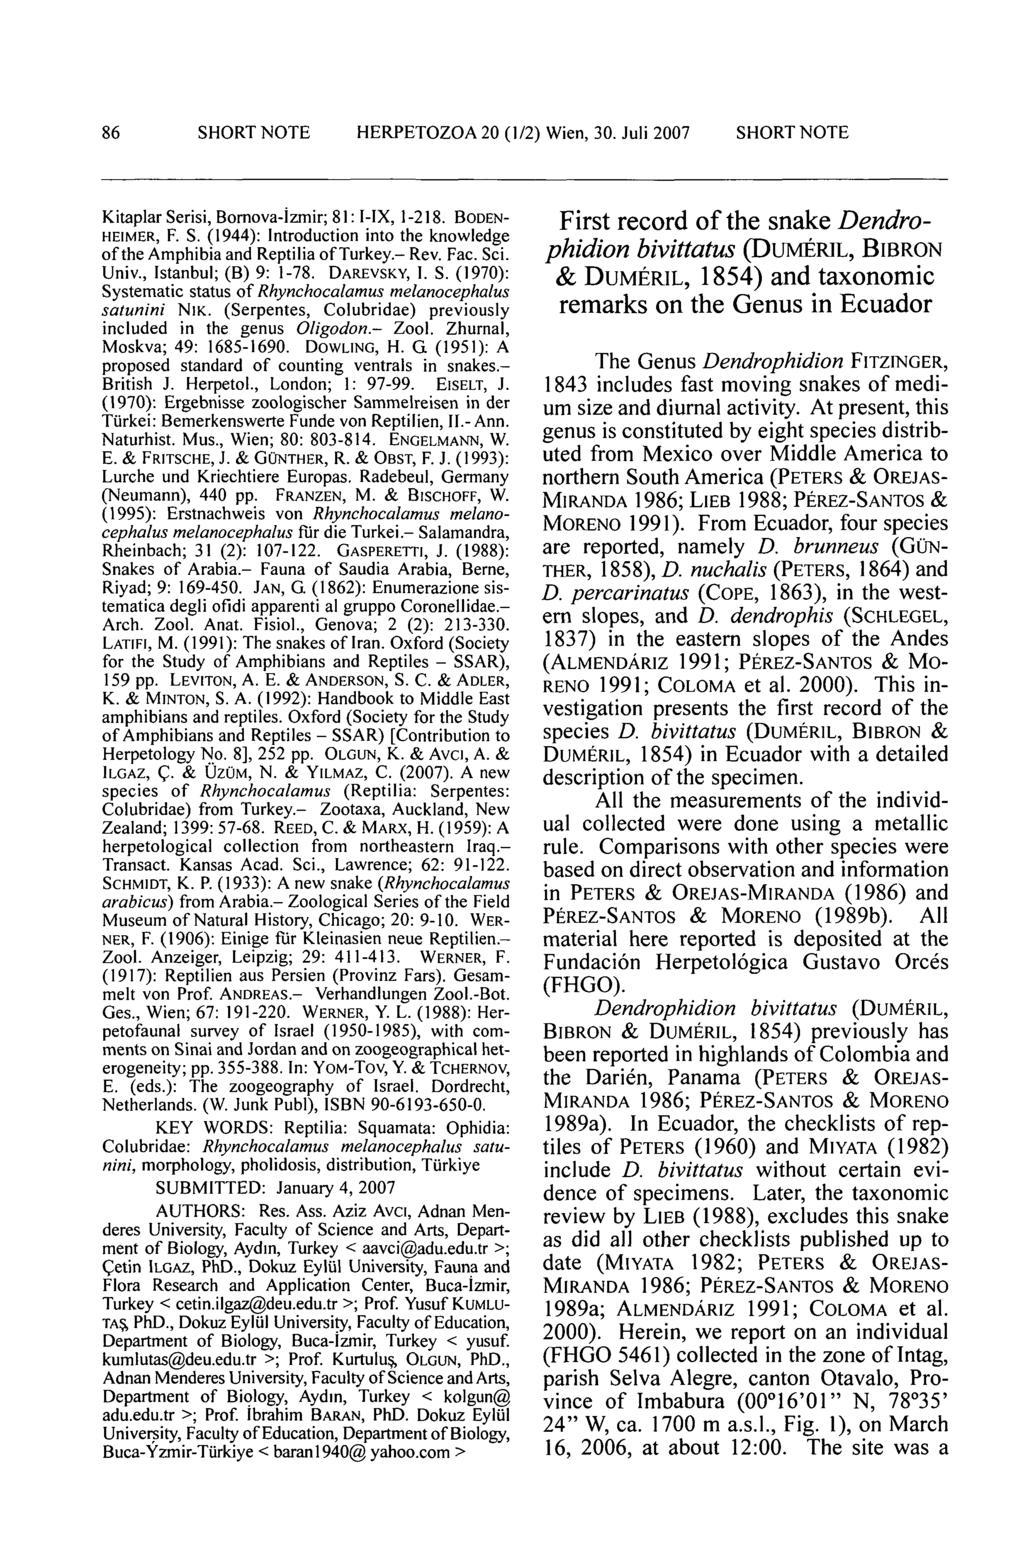 86 SHORT NOTE HERPETOZOA 20 (/2) Wien, 30. Juli 2007 SHORT NOTE Kitaplar Serisi, Bornova-izmir; 8:-IX, -28. BODEN- HEIMER, F. S. (944): Introduction into the knowledge of the Amphibia and Reptilia of Turkey.